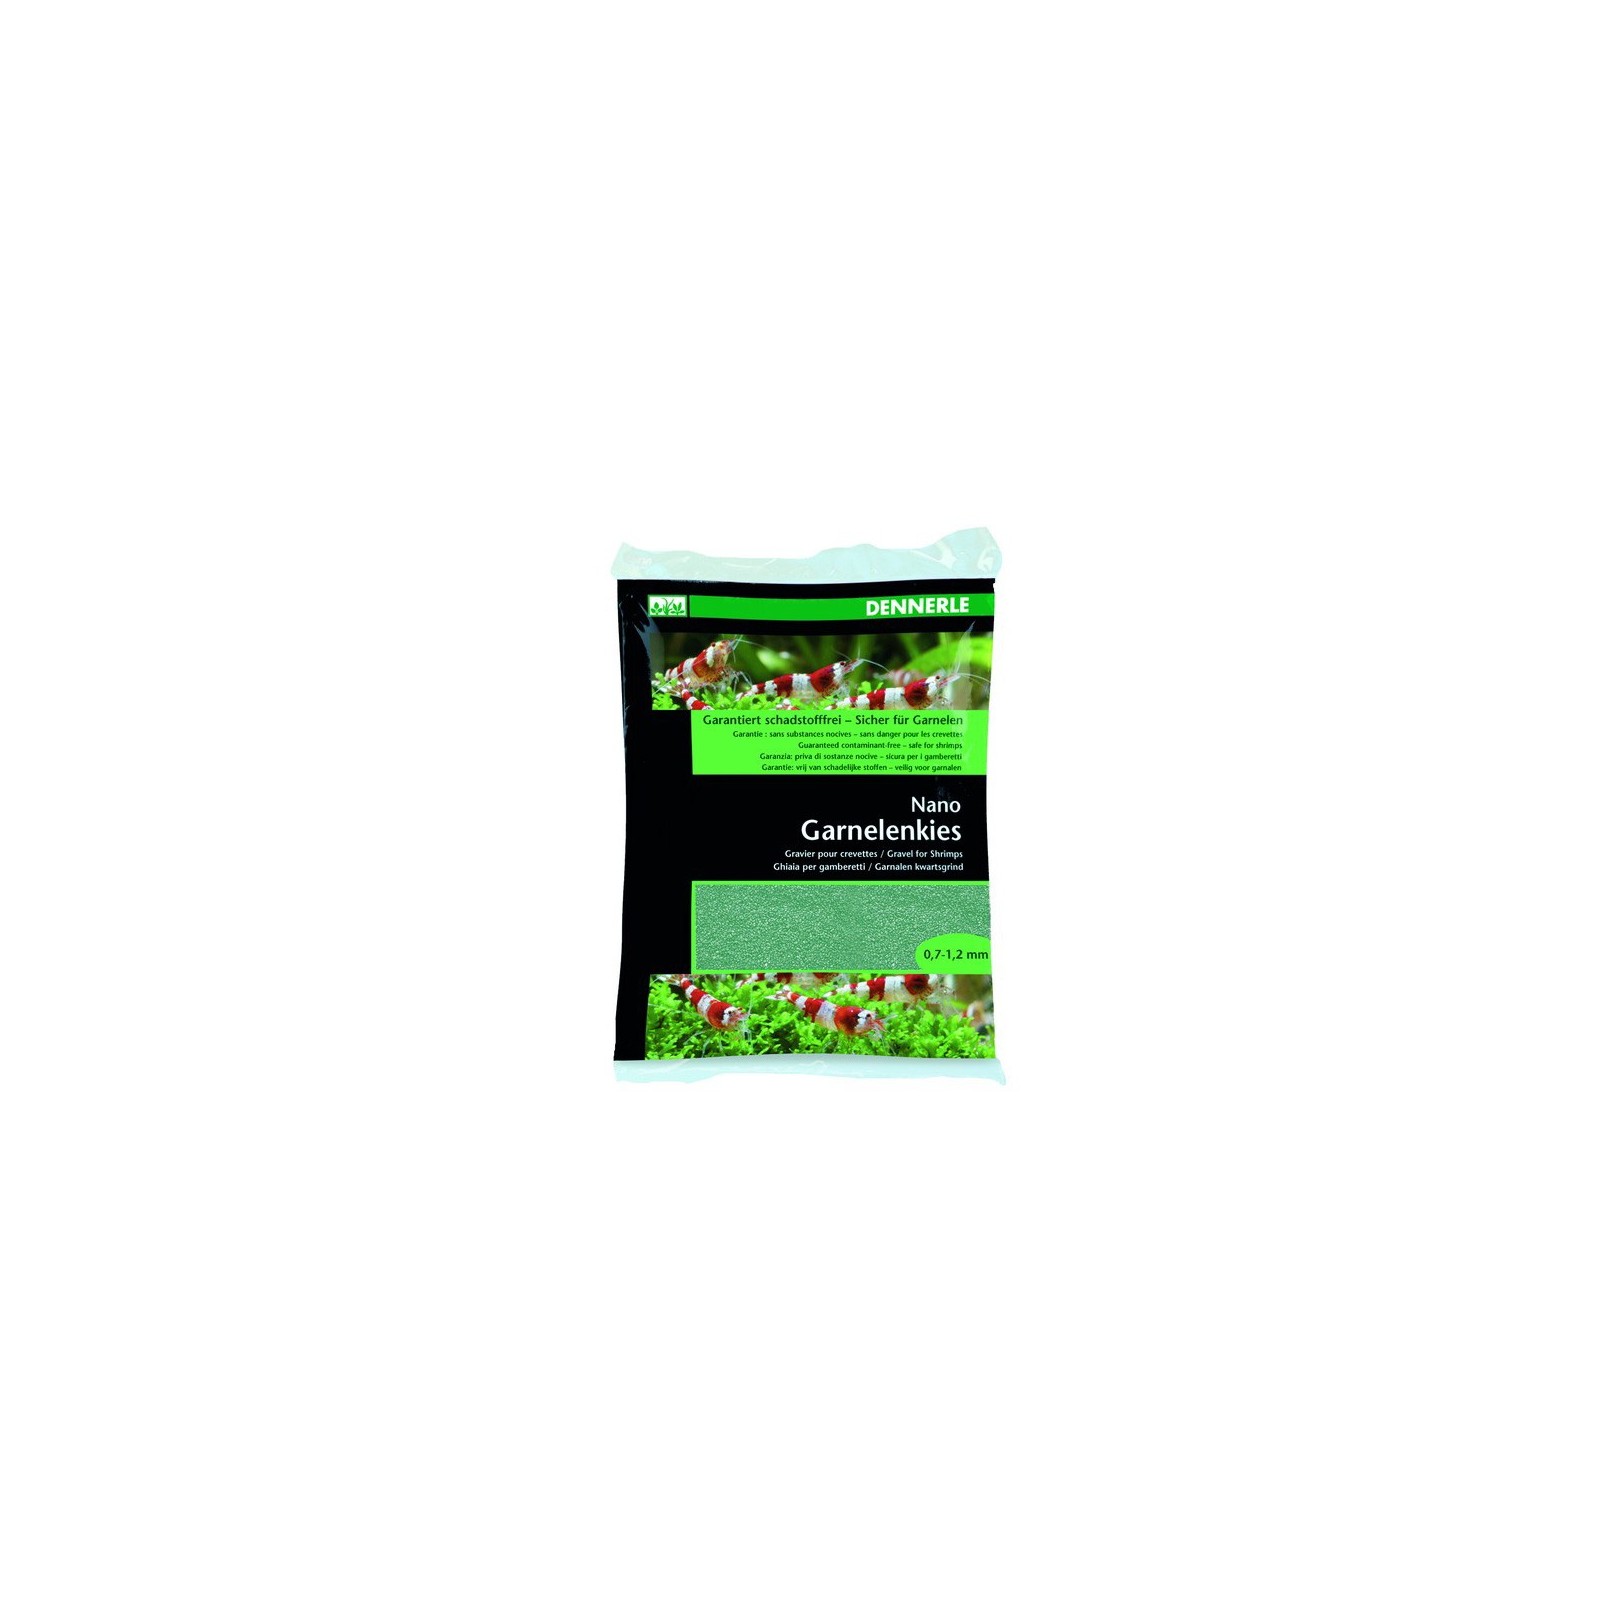 Dennerle 5859 Nano Garnelemkies Java Verde  Ghiaia per gamberetti d'acquario 2 kg